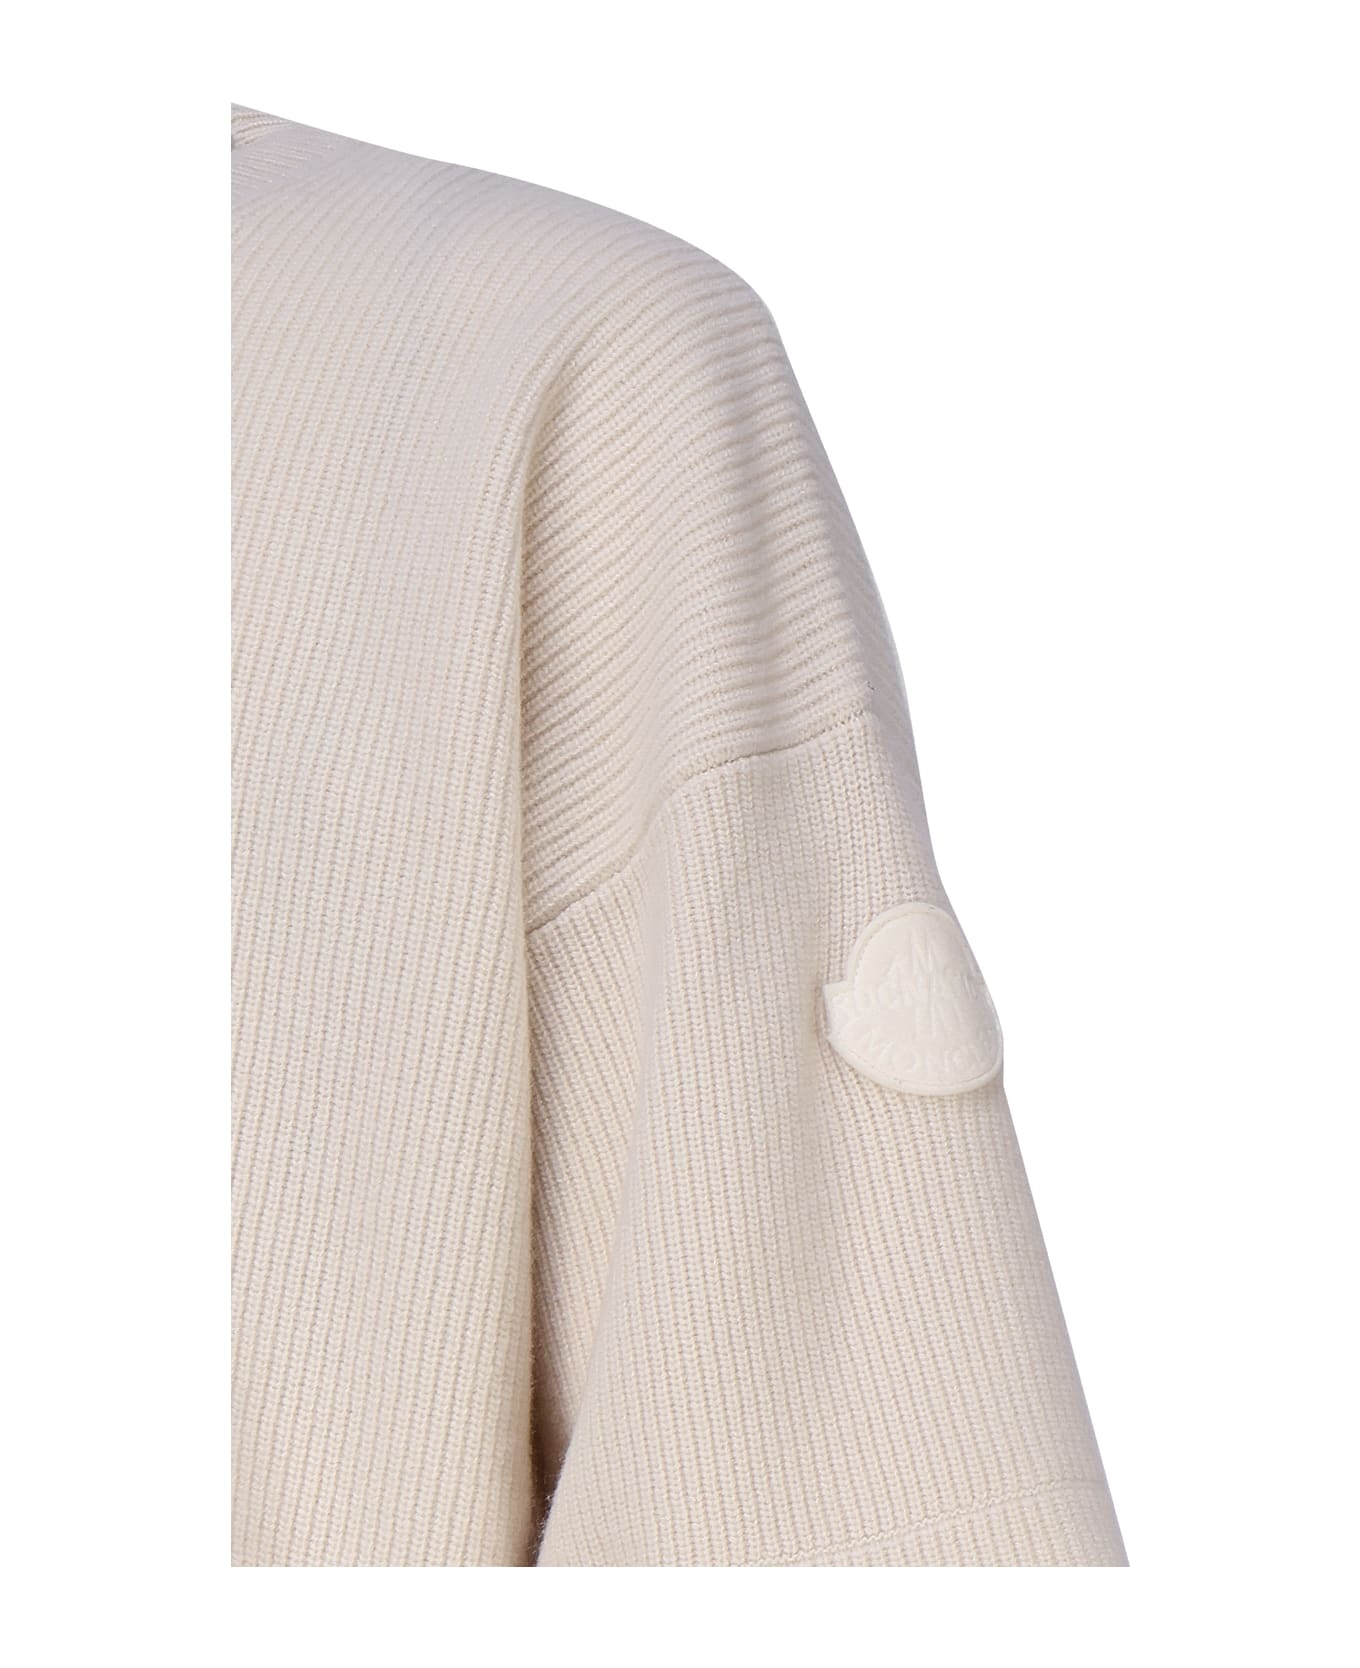 Moncler Genius Wool Sweater - Ivory ニットウェア